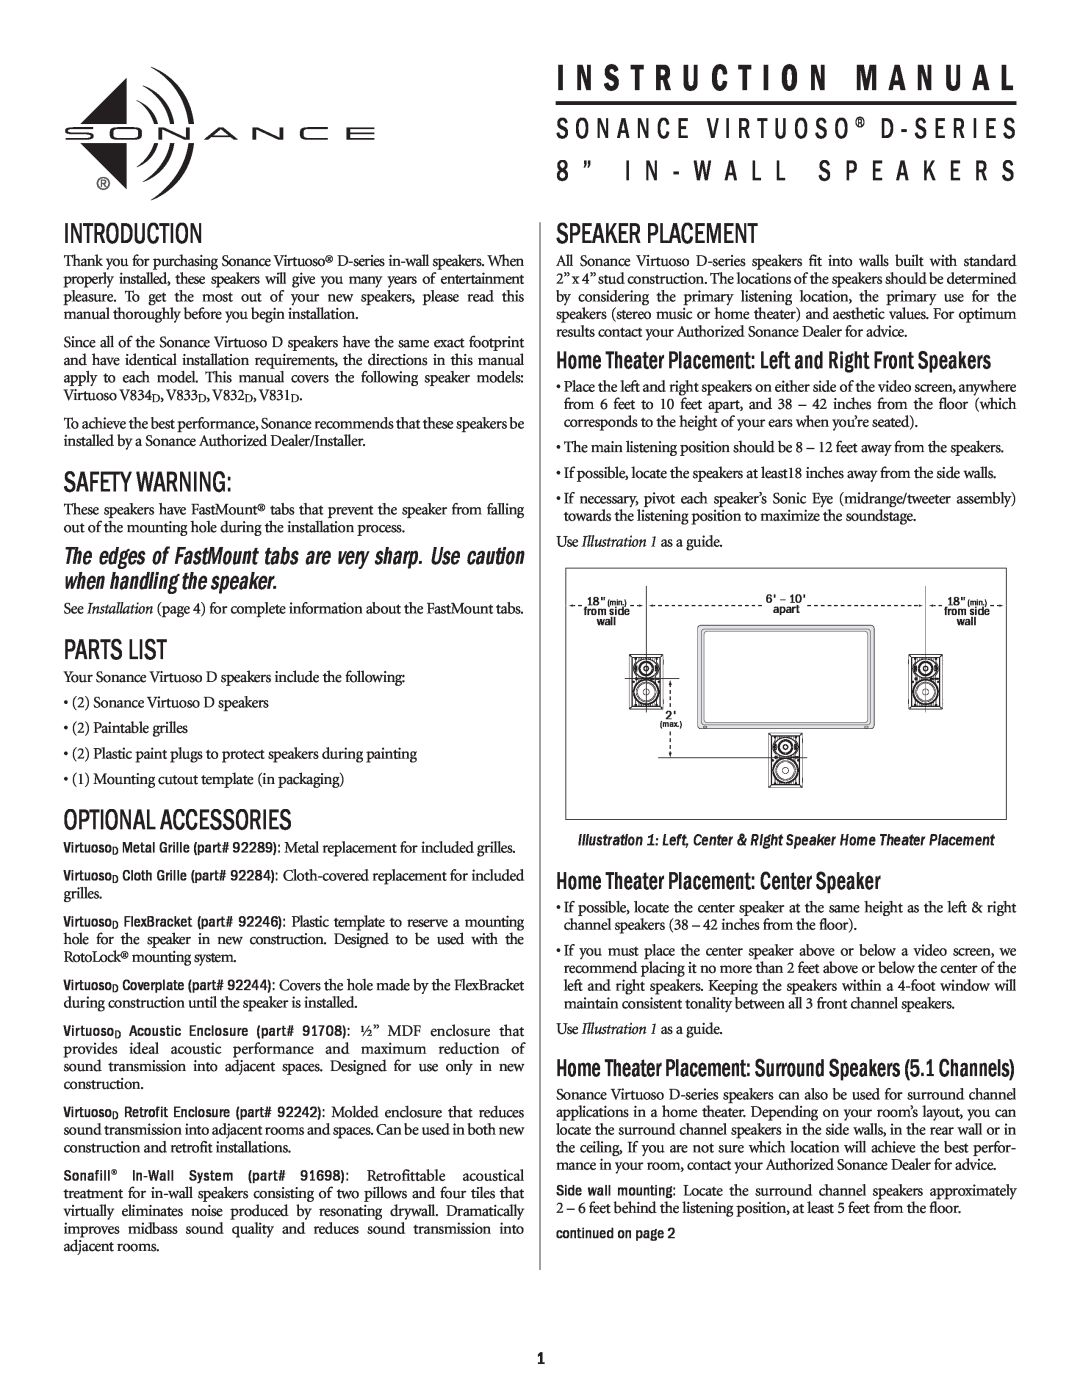 Sonance D-series instruction manual I N S T R U C T I O N M A N U A L, Introduction, Safety Warning, Parts List 